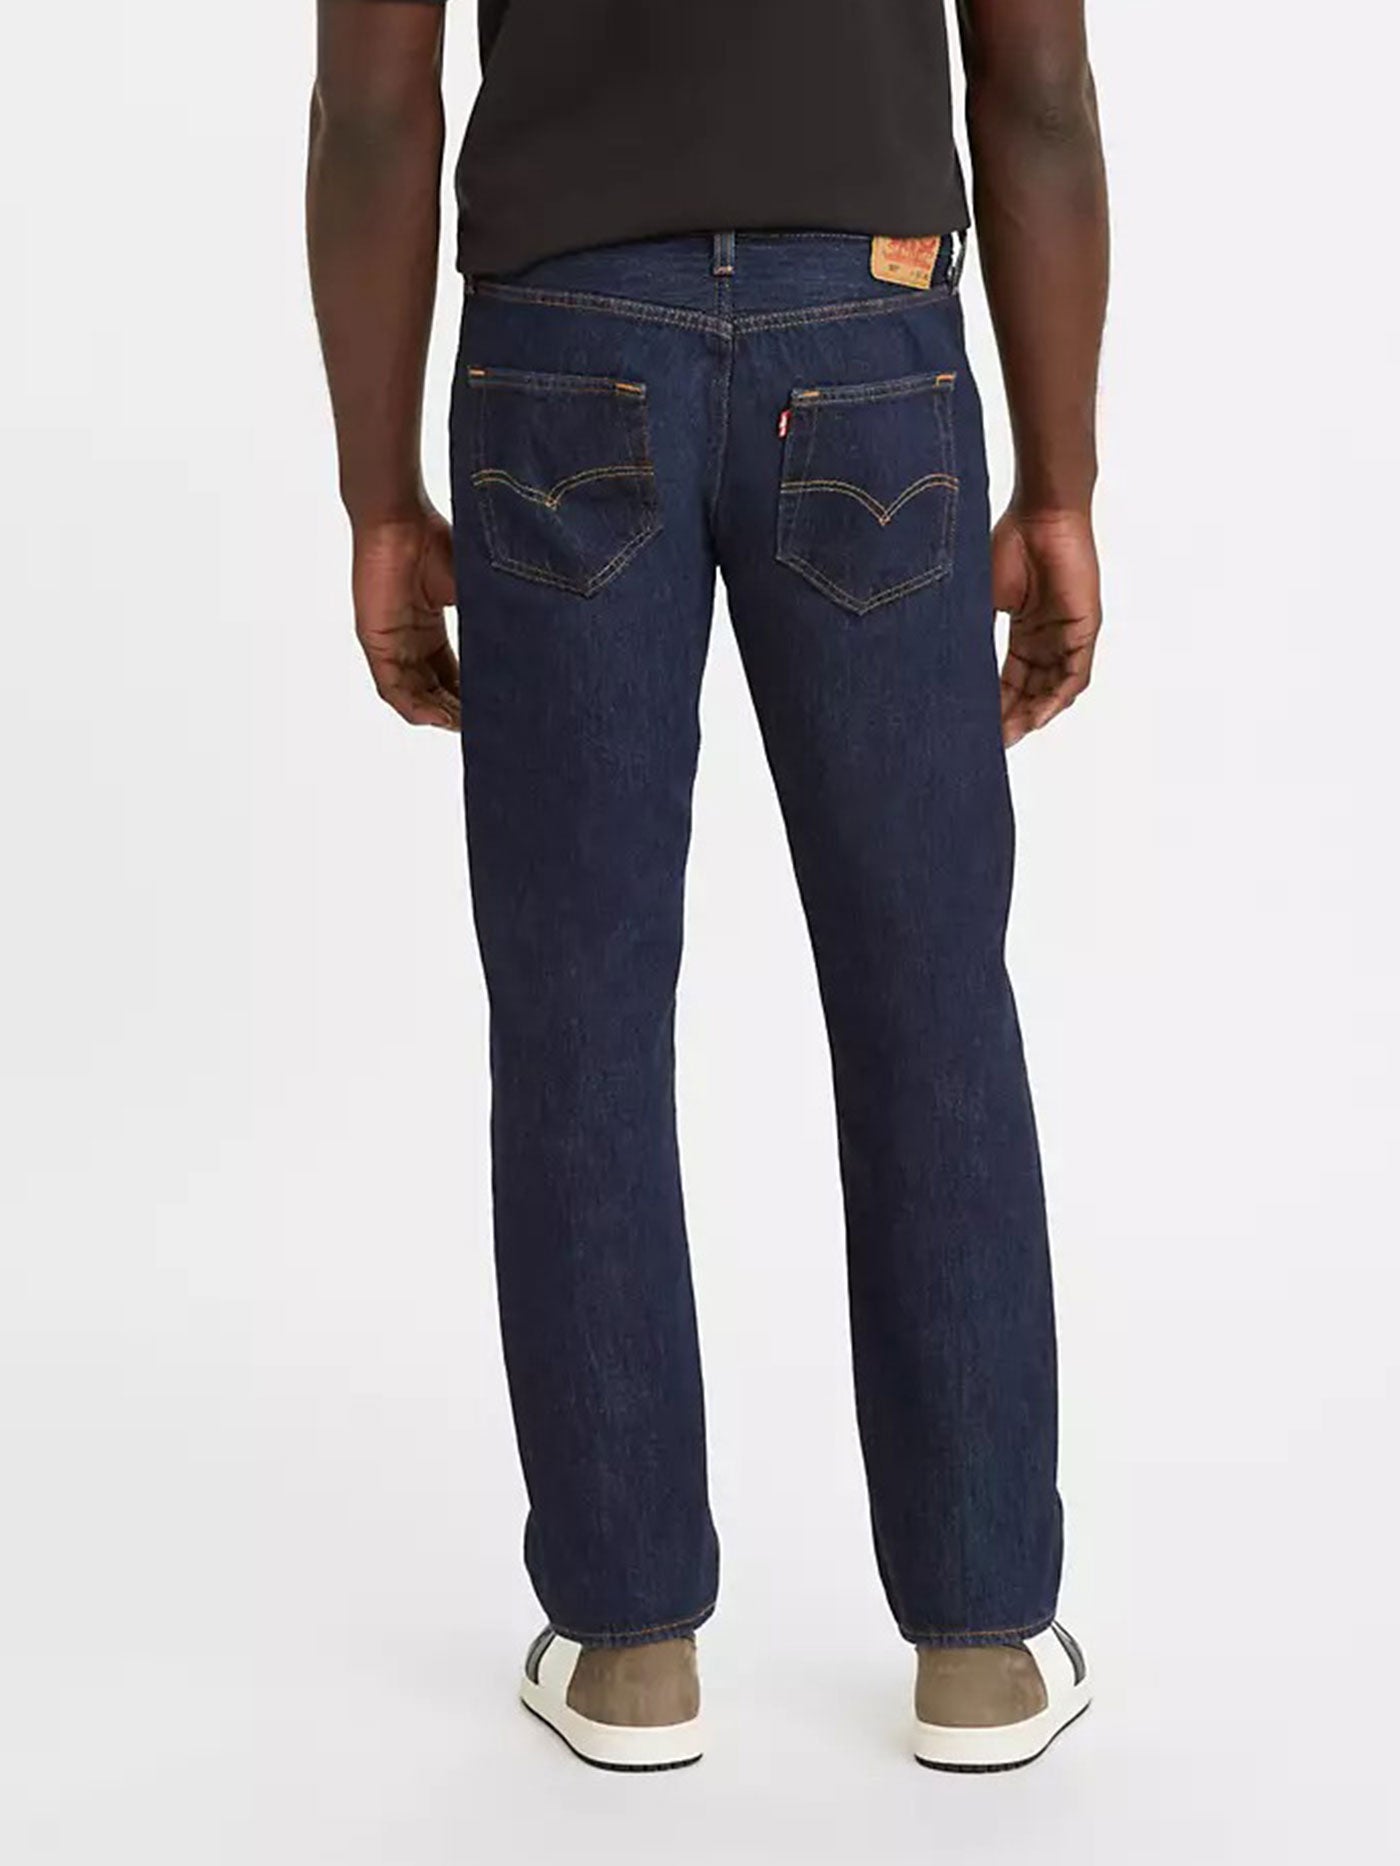 Levis Original Rinse Straight Fit Jeans